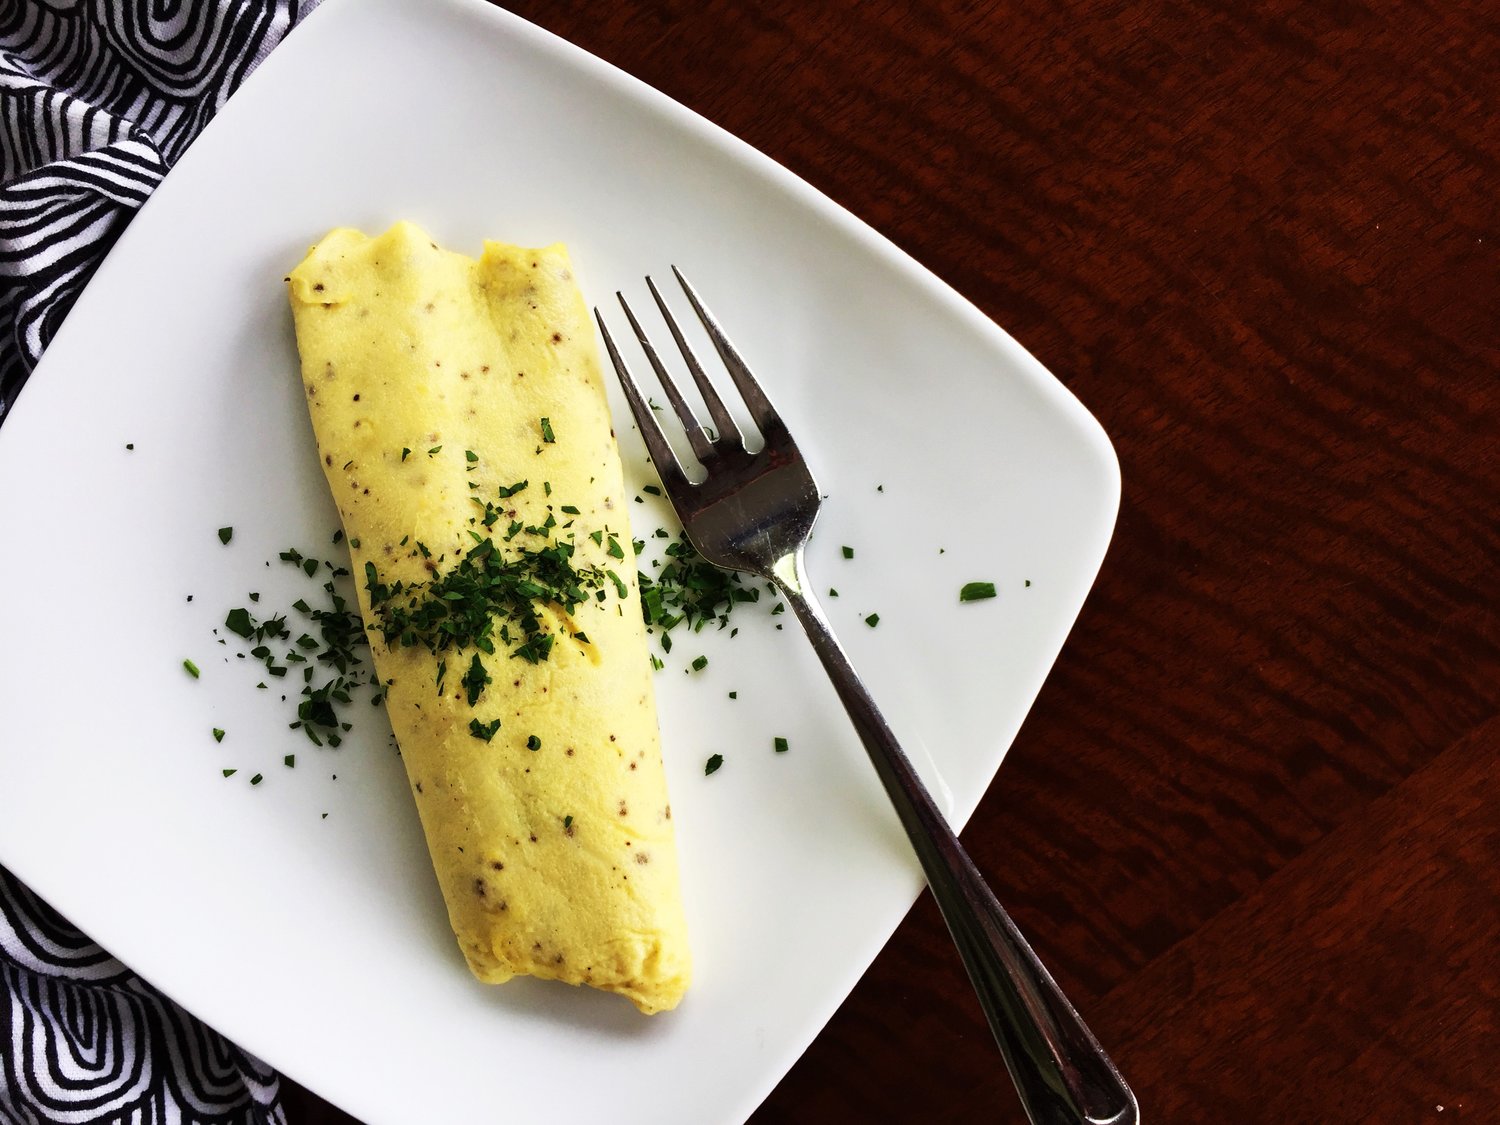 Flawless Flipping: The Best Omelette Spatula 